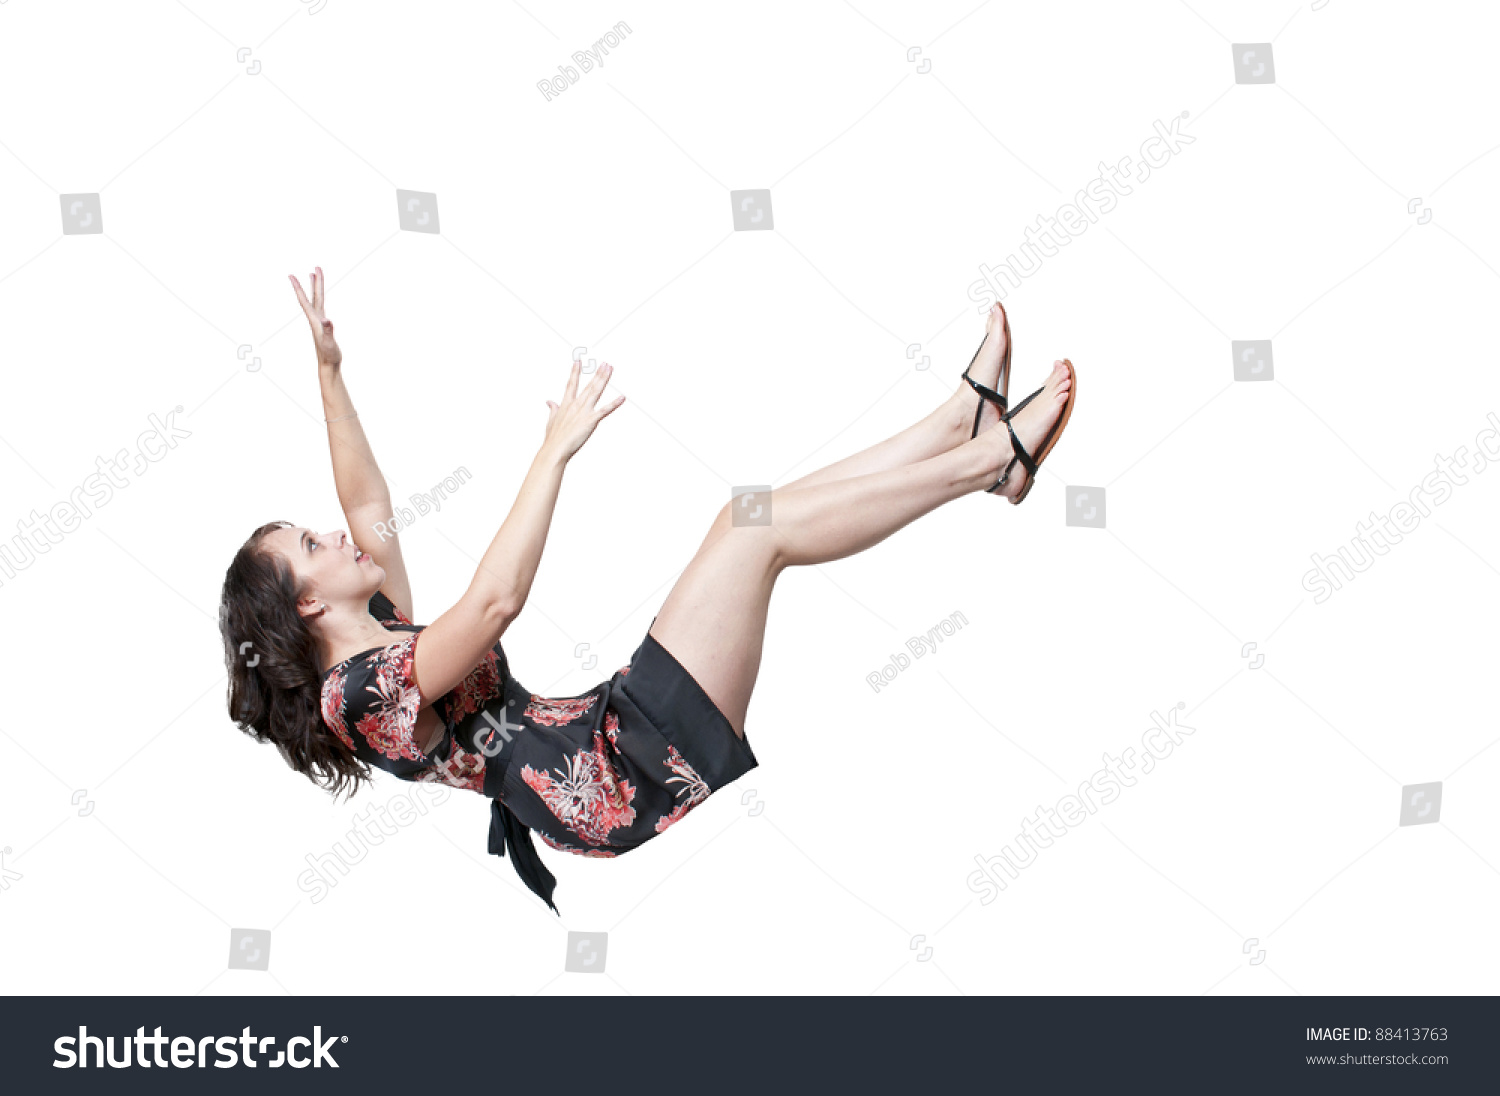 clipart girl falling - photo #44